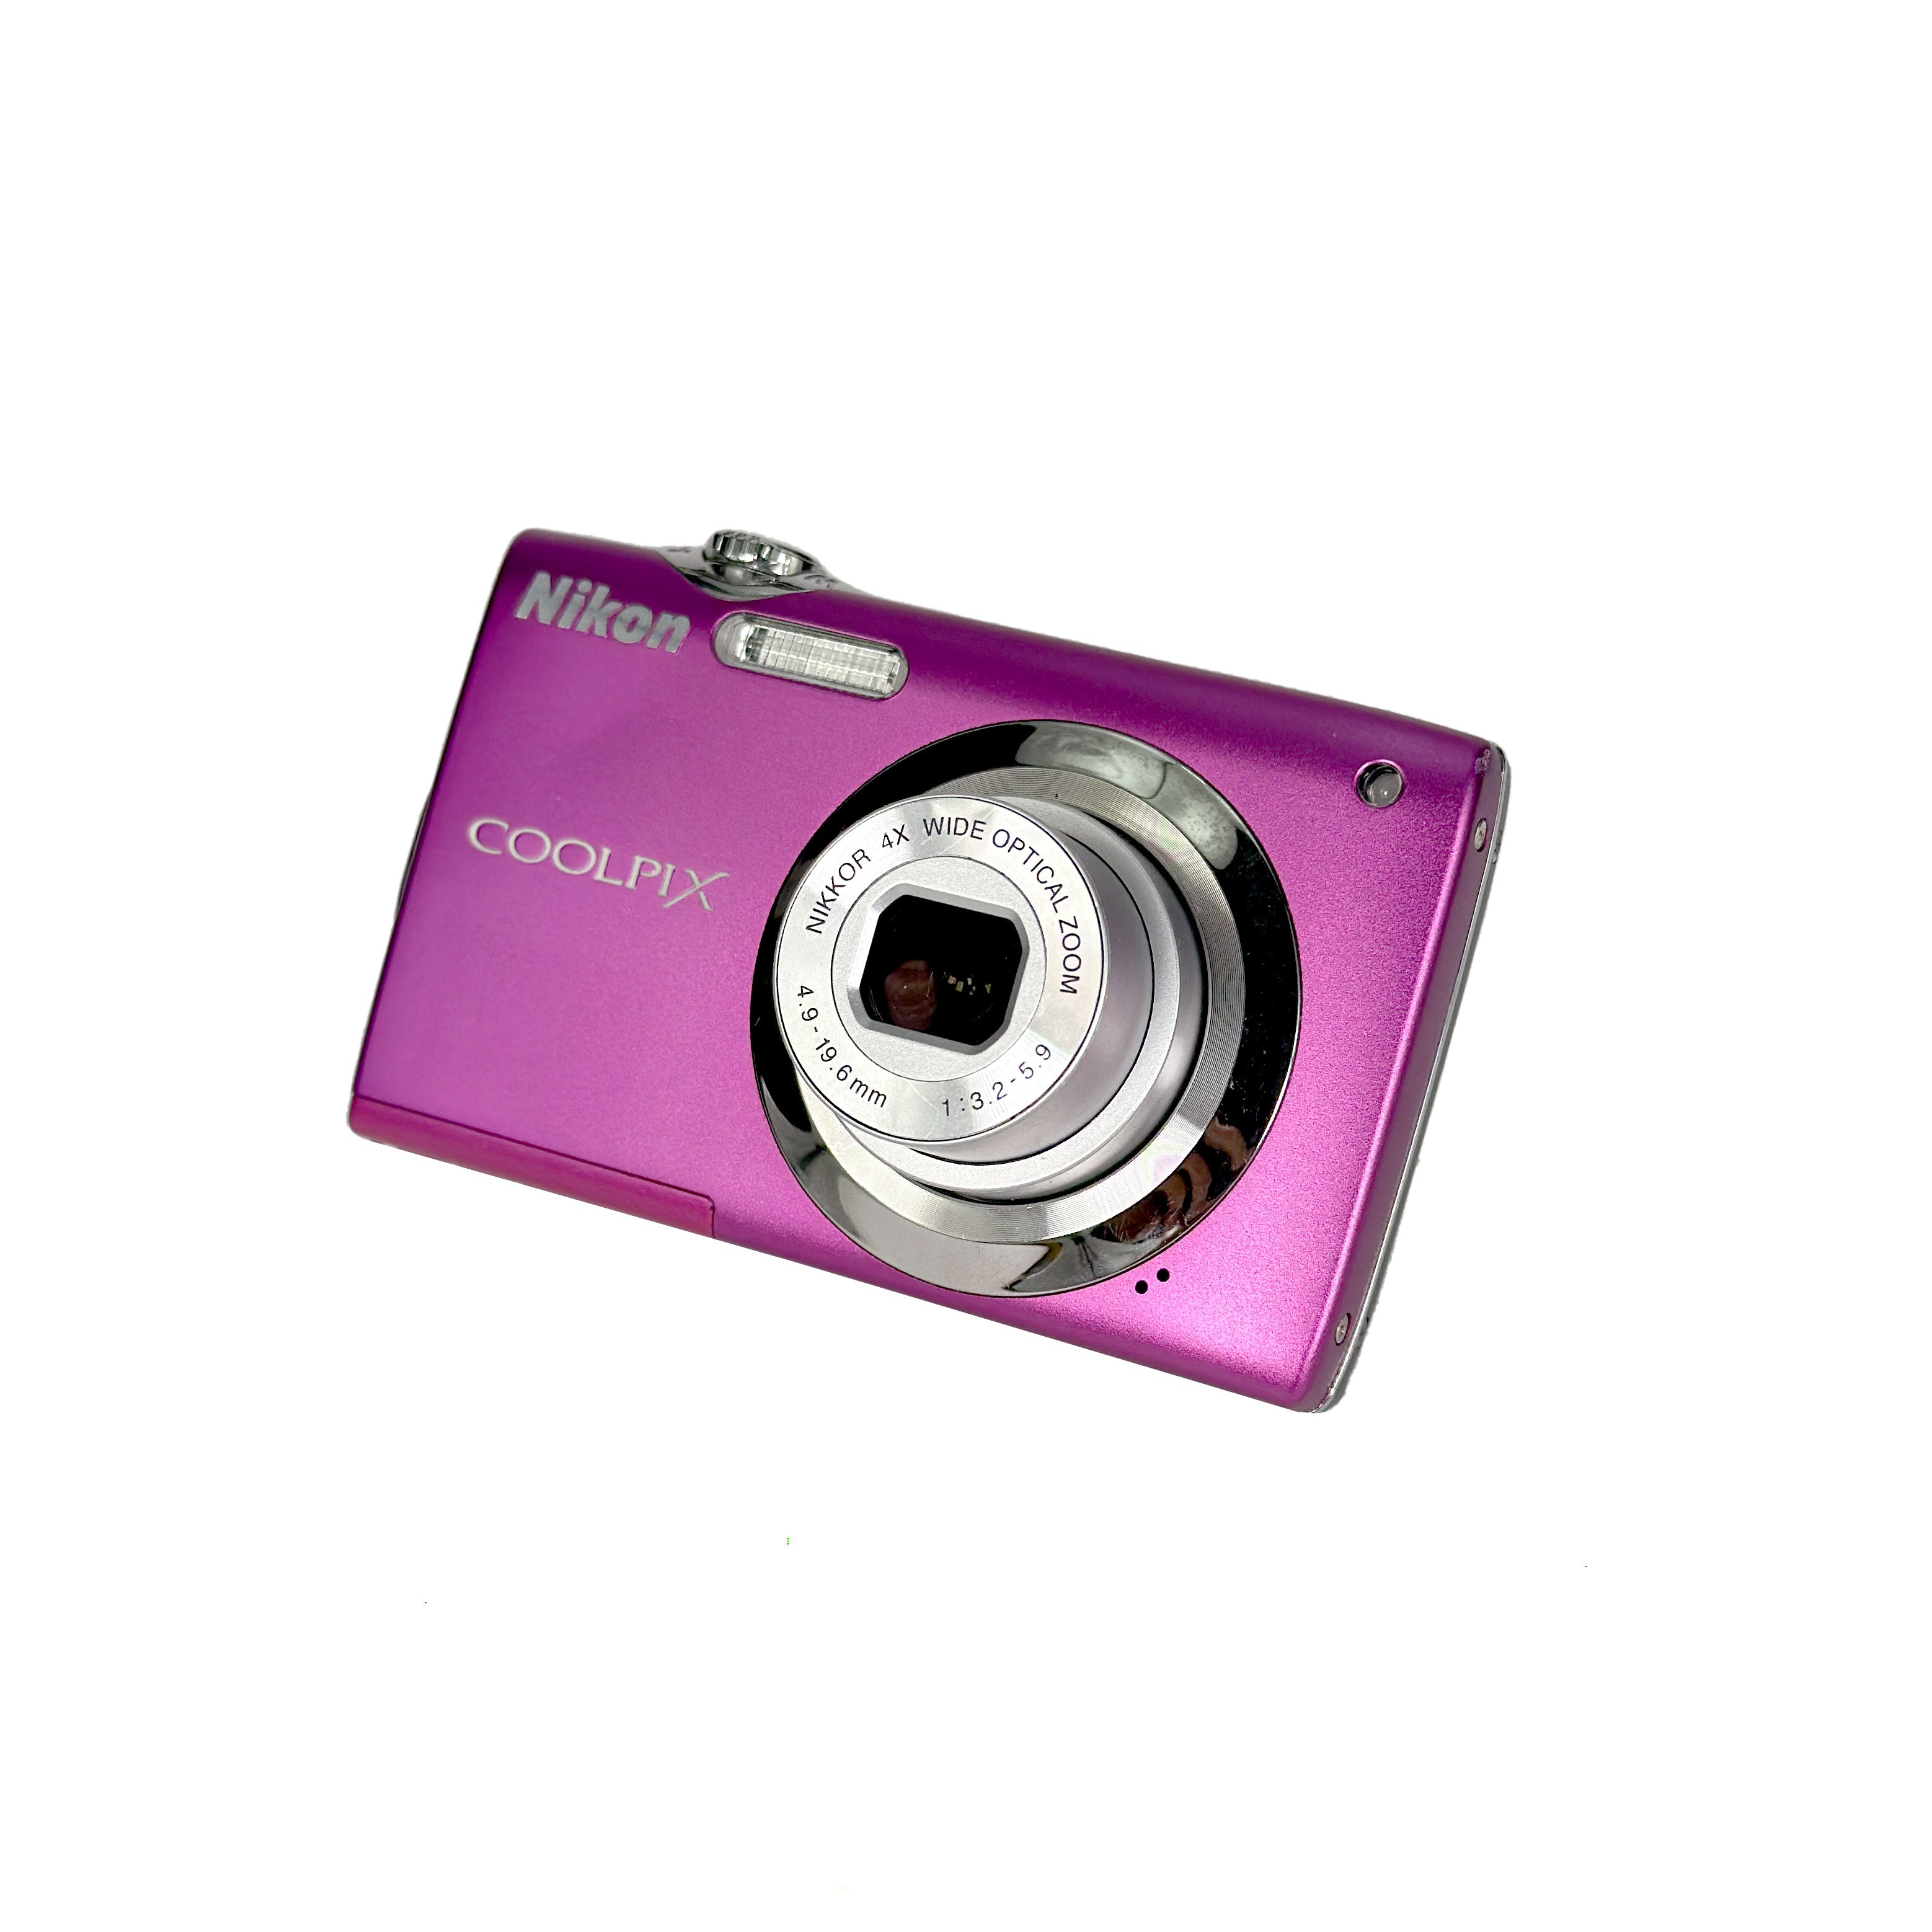 Nikon Coolpix S3000 Digital Compact